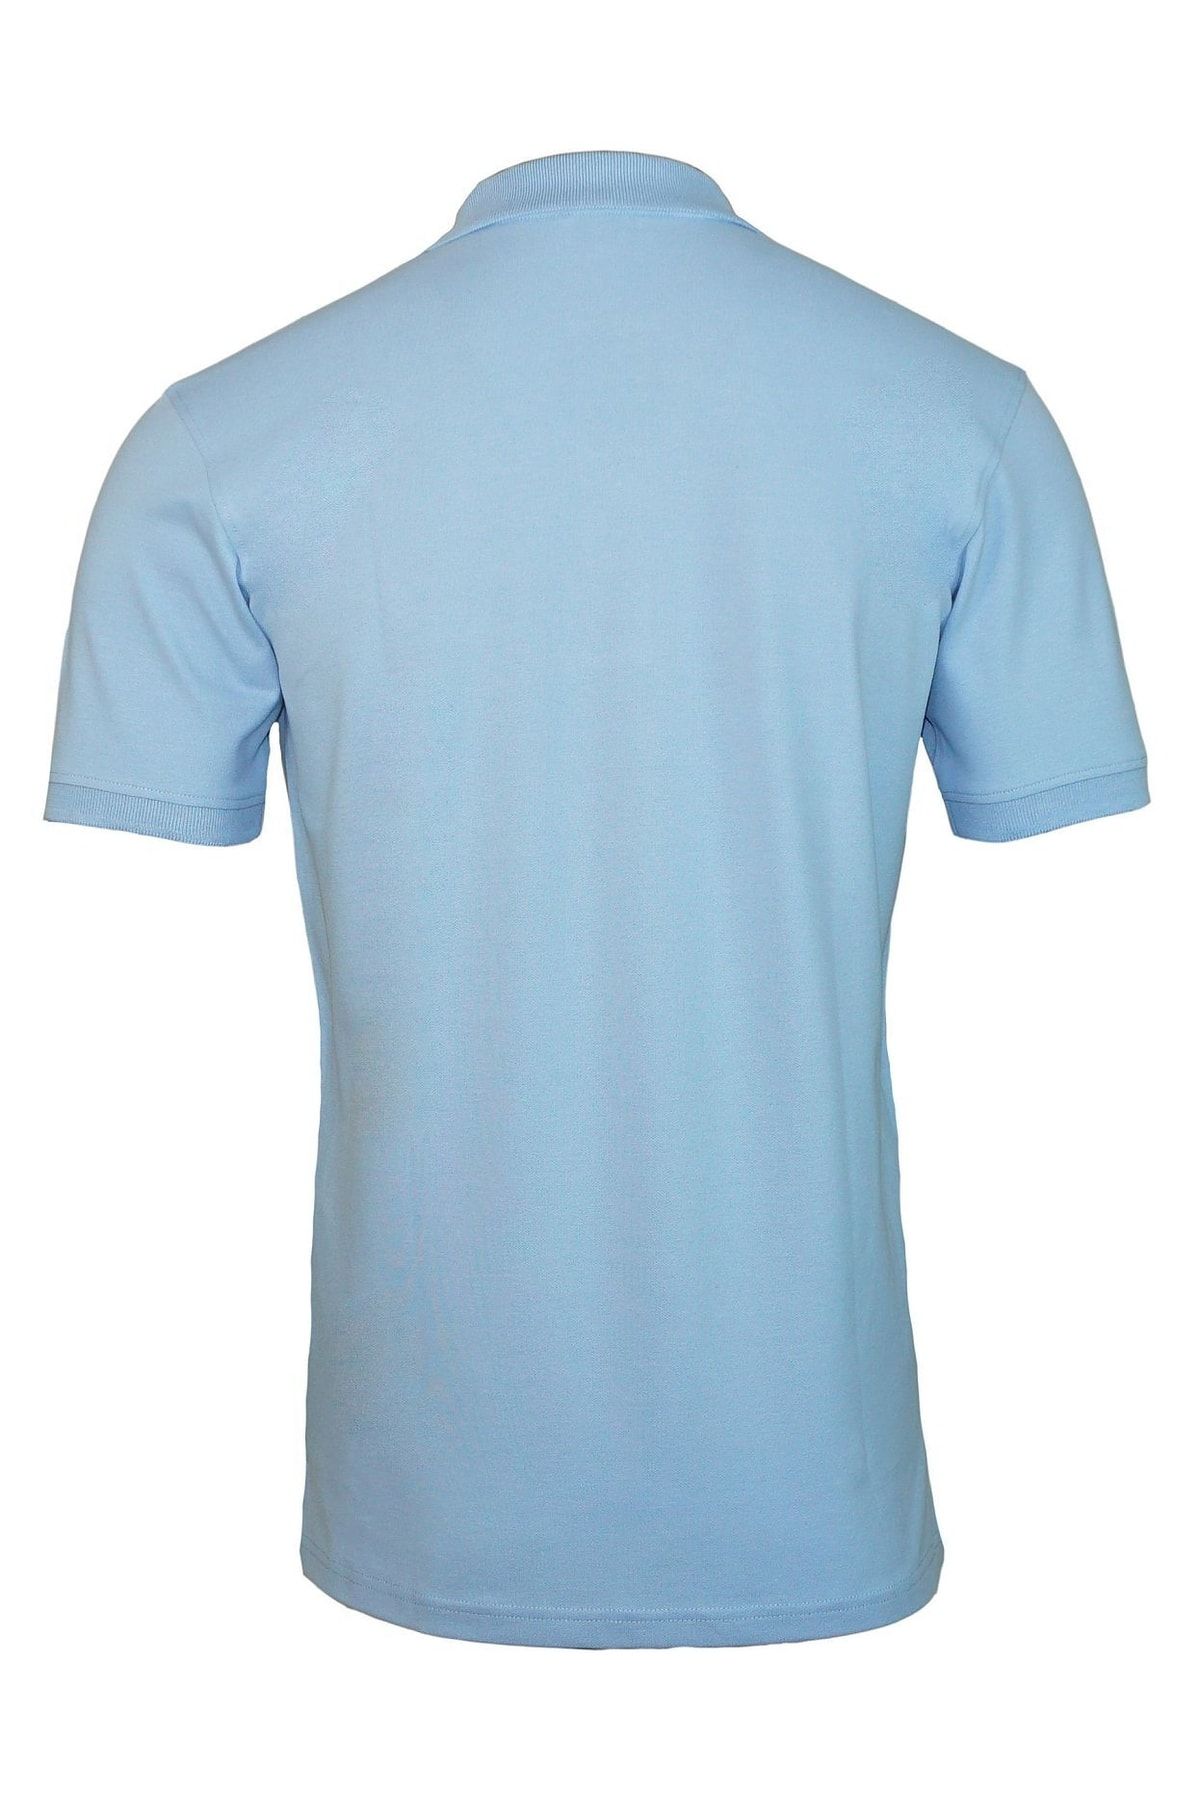 U.S. Polo Assn. - - - Poloshirt Fit Blau Regular Trendyol